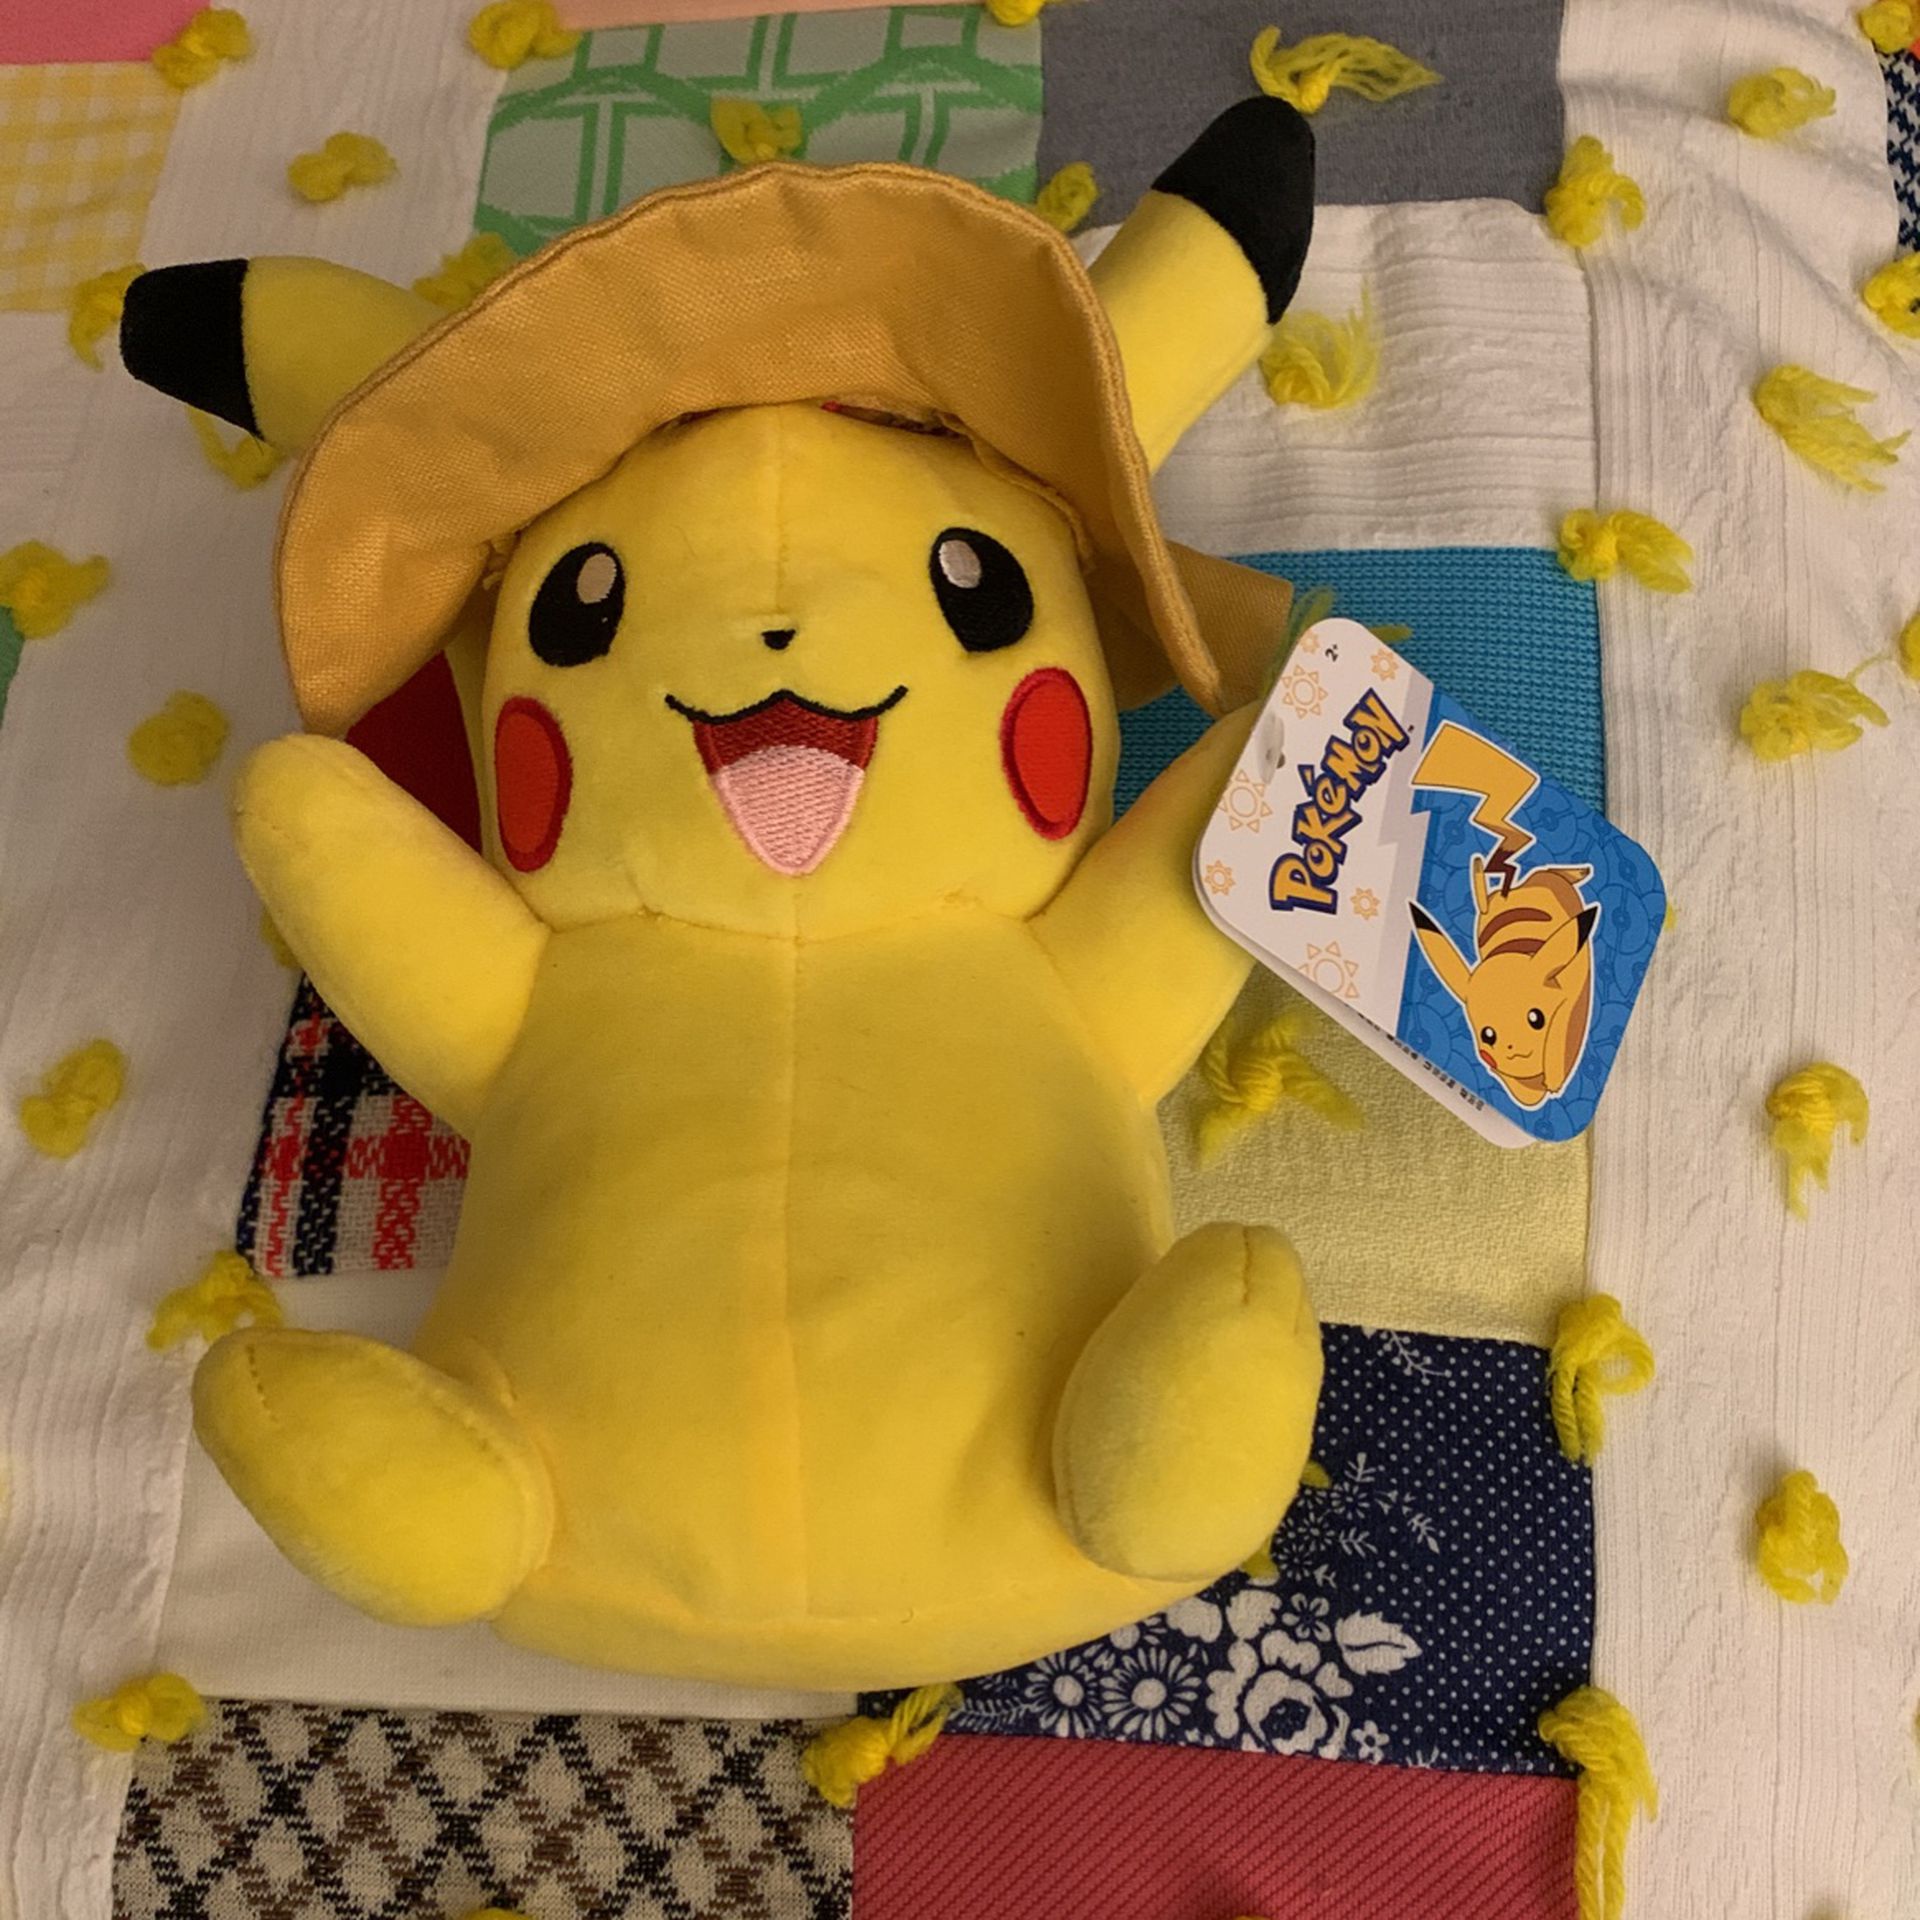 Nwt Poke’mon Pikachu Stuffed Toy 